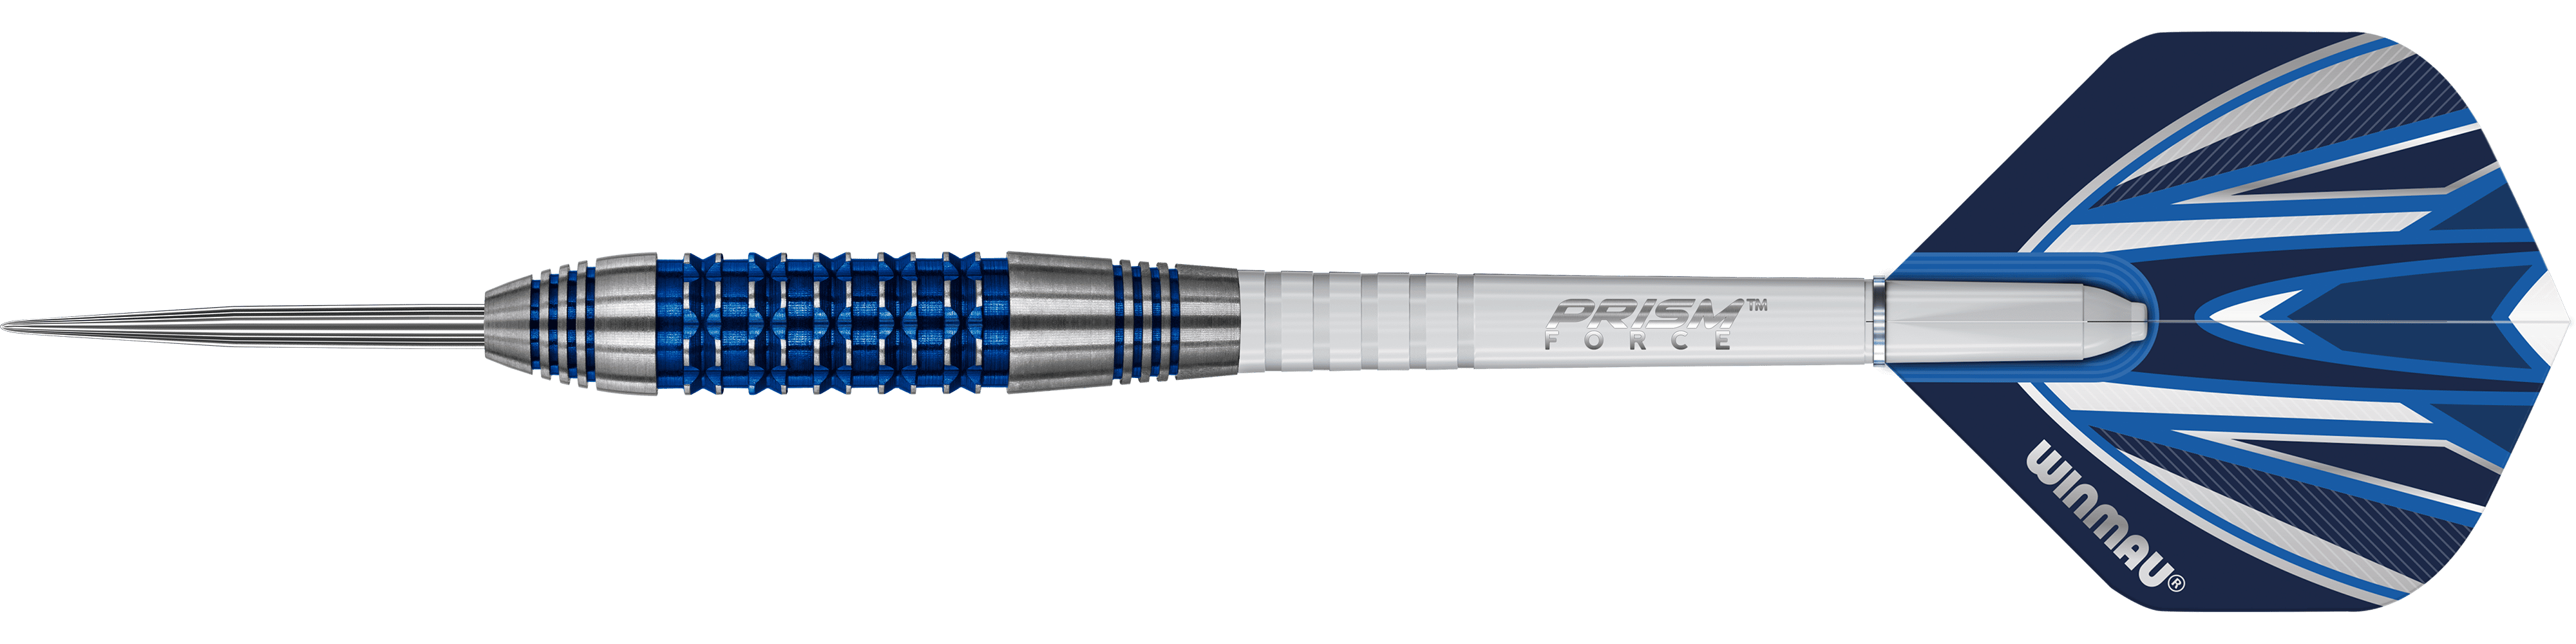 Winmau Andy Fordham Special Edition Steel Darts - 24g